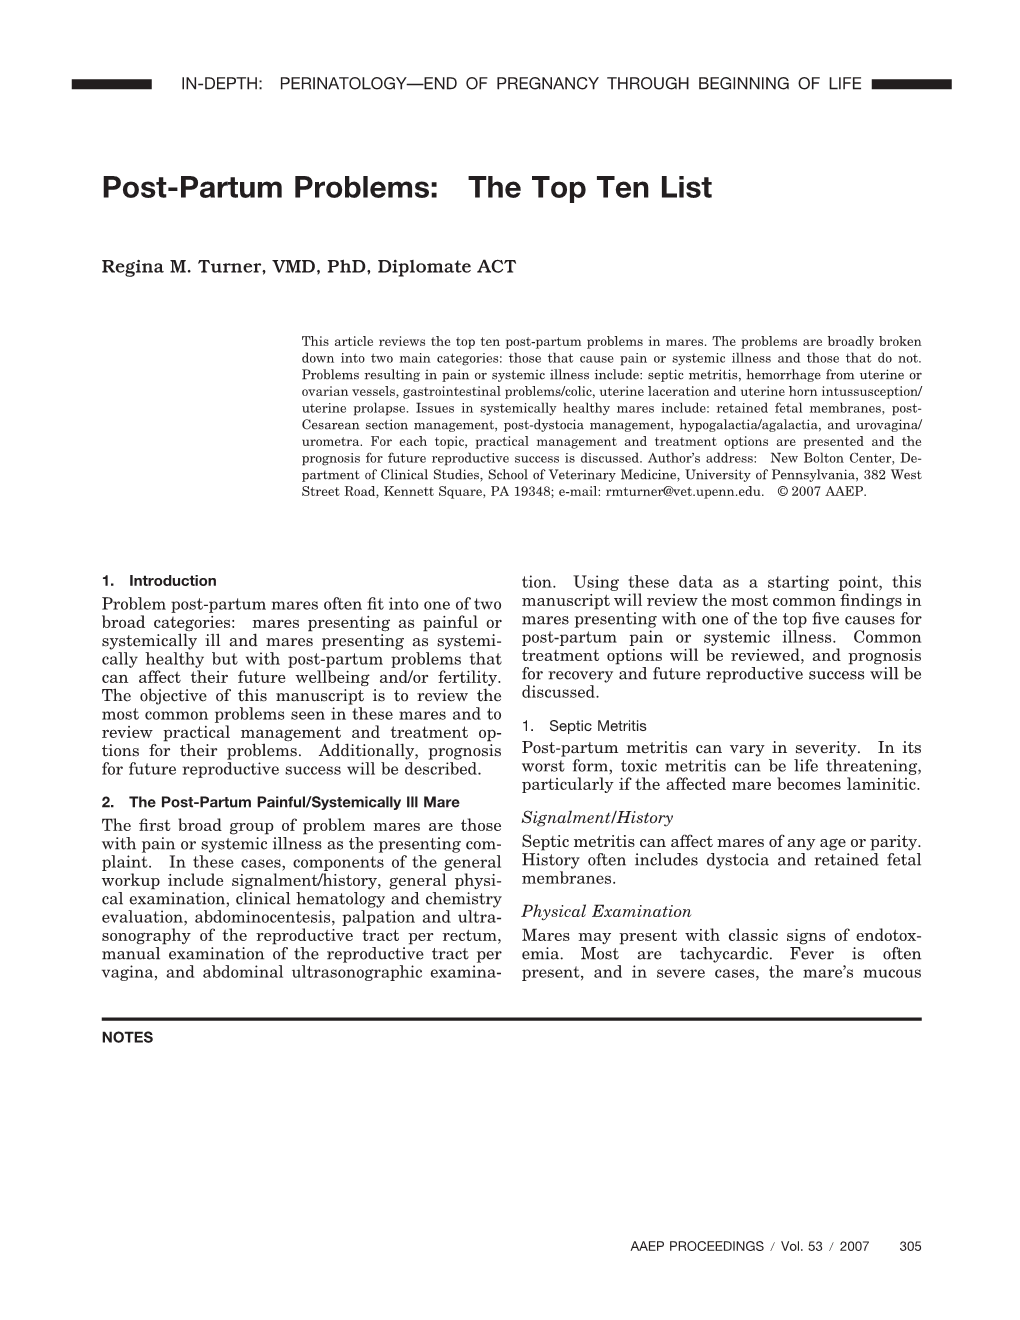 Post-Partum Problems: the Top Ten List